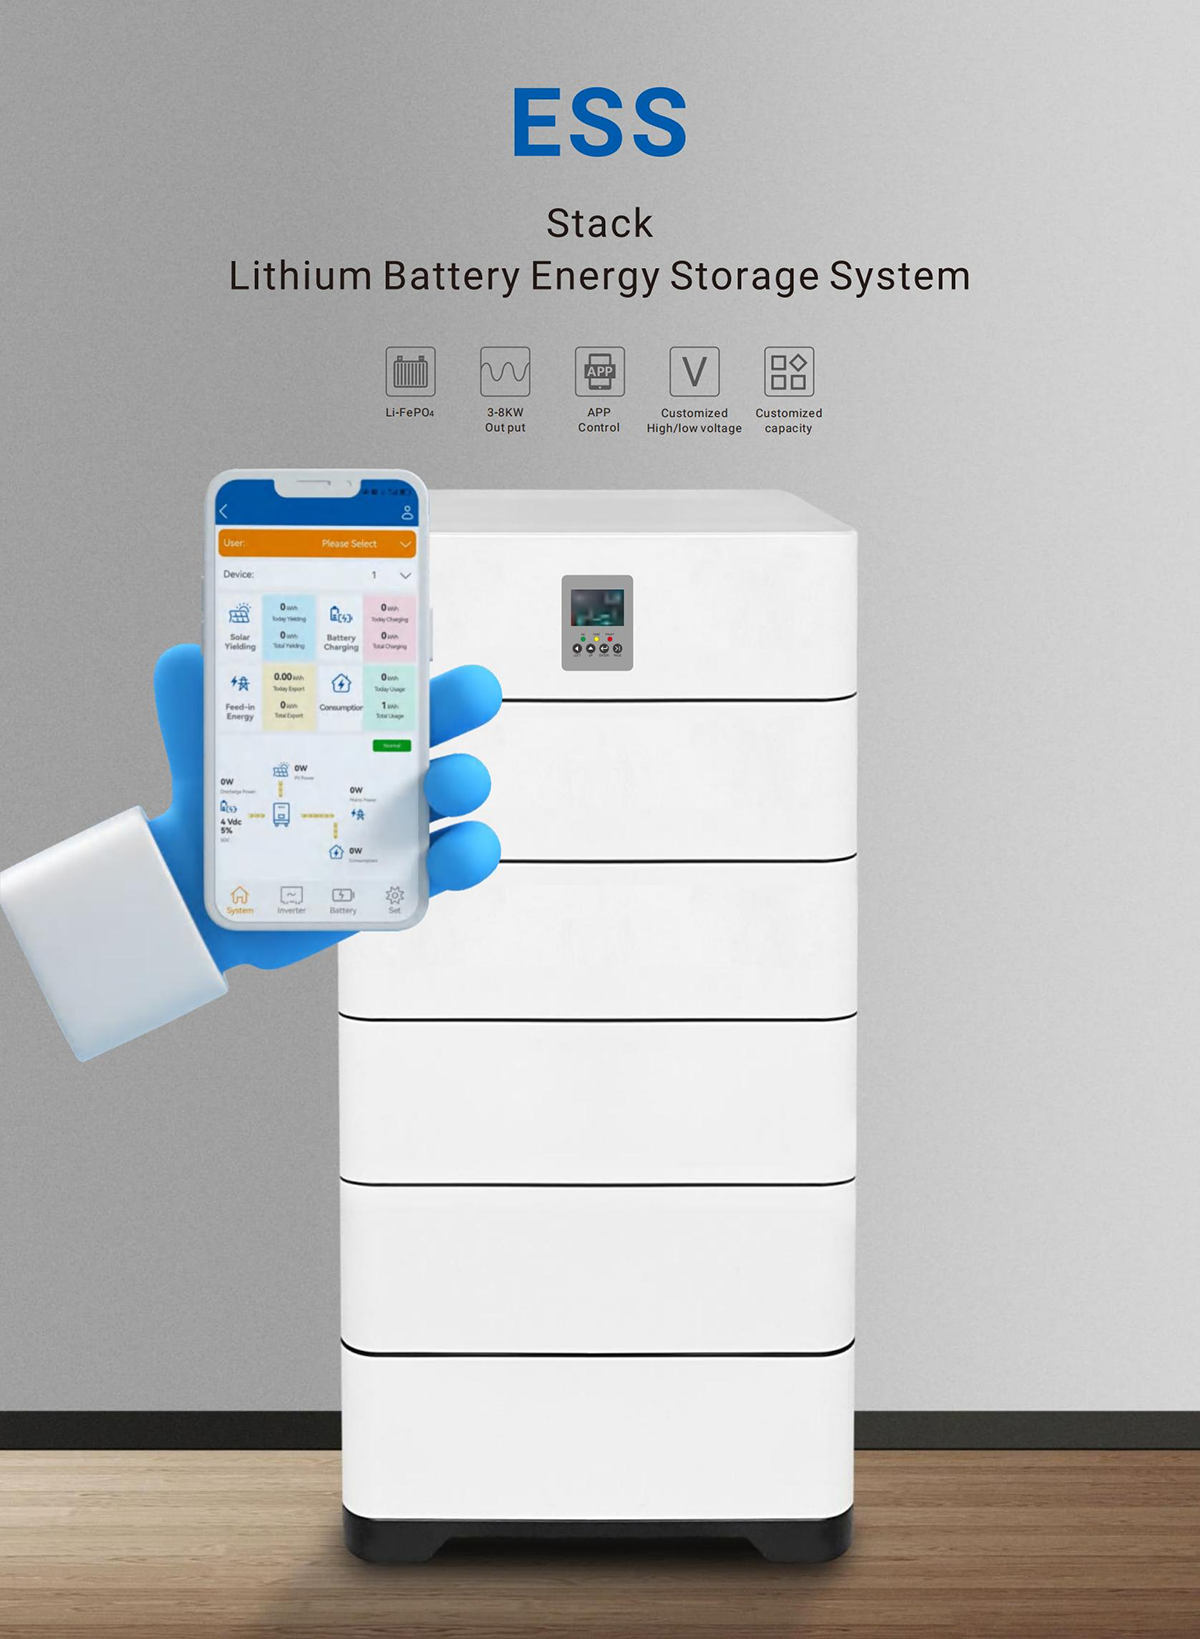 solar battery storage